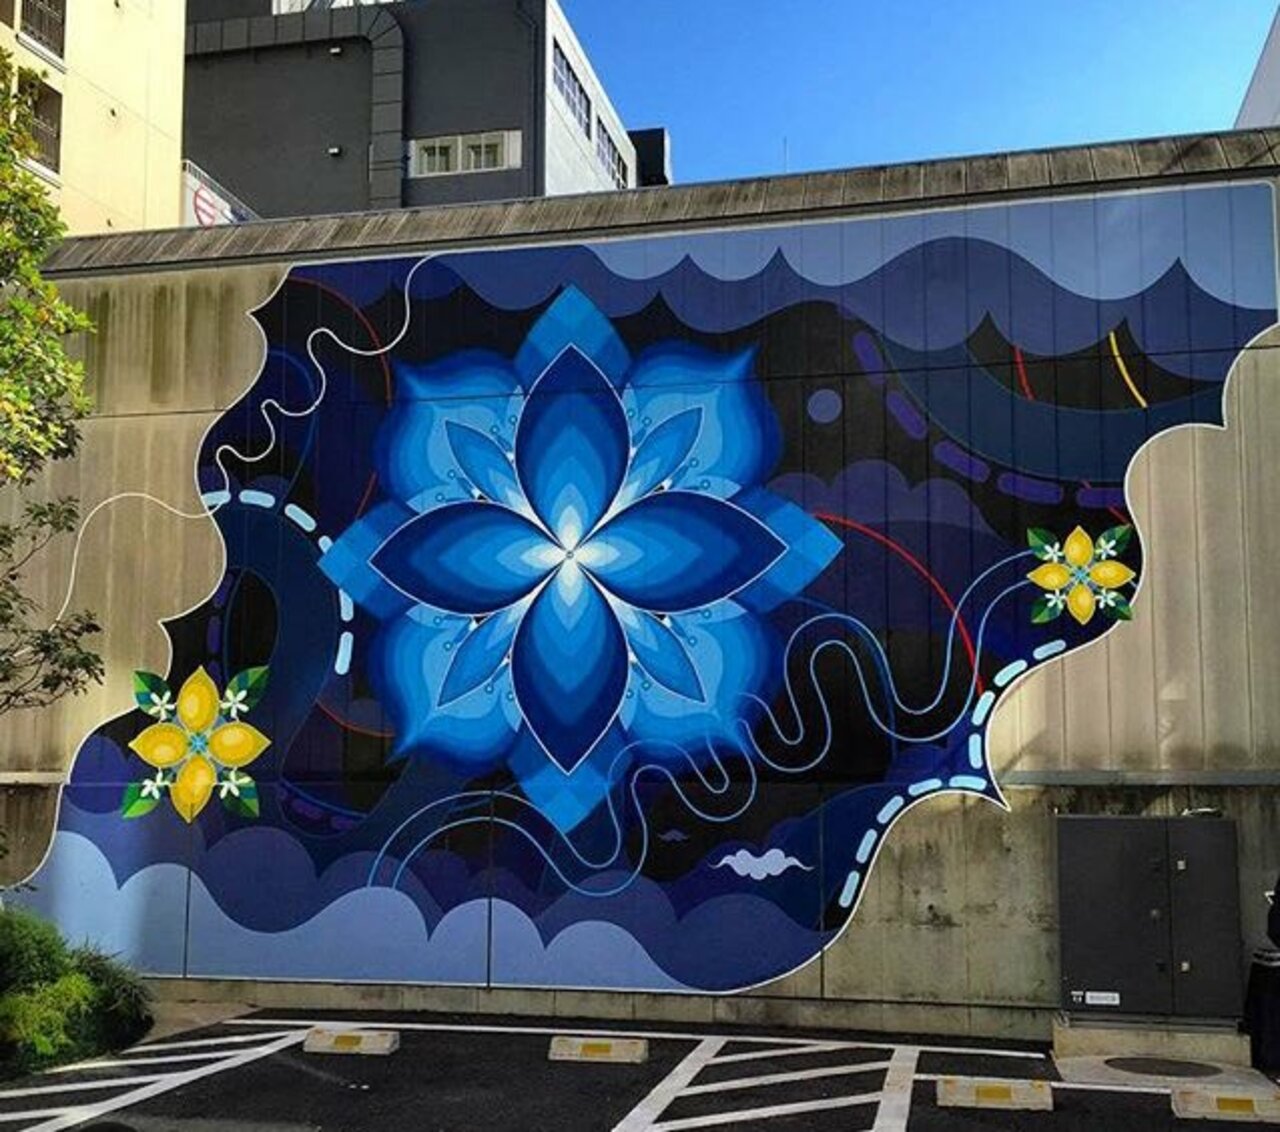 New Street Art by htzk, kami_htzk + sasu_lyri 

#art #graffiti #mural #streetart https://t.co/YIQncpk7x4